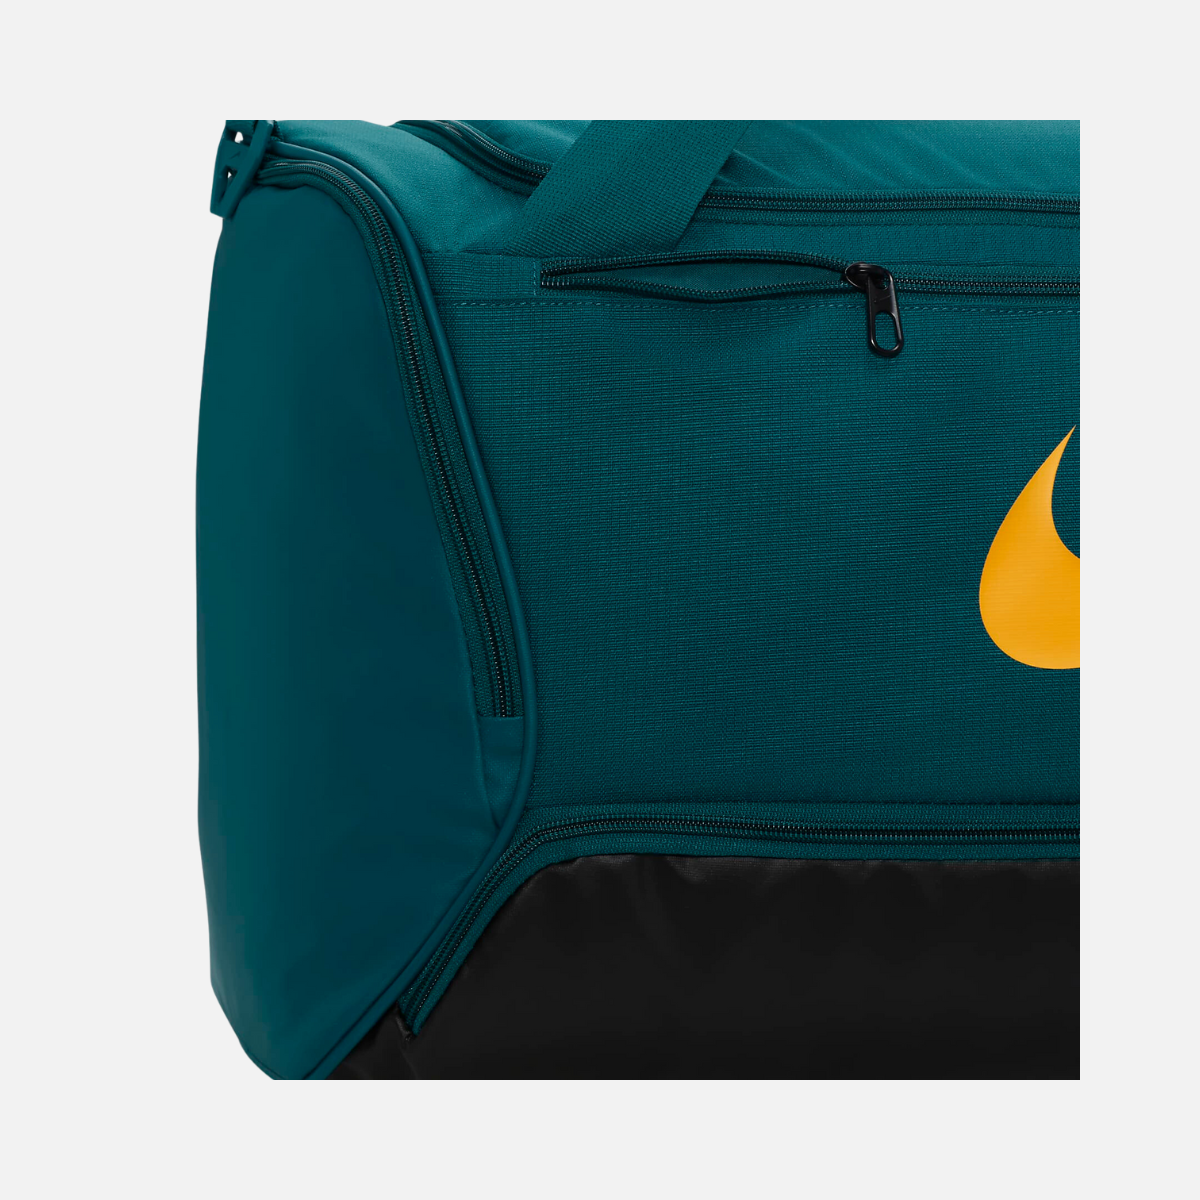 Nike Brasilia 9.5 Training Duffel Bag (60L) -Geode Teal/Black/Sundial